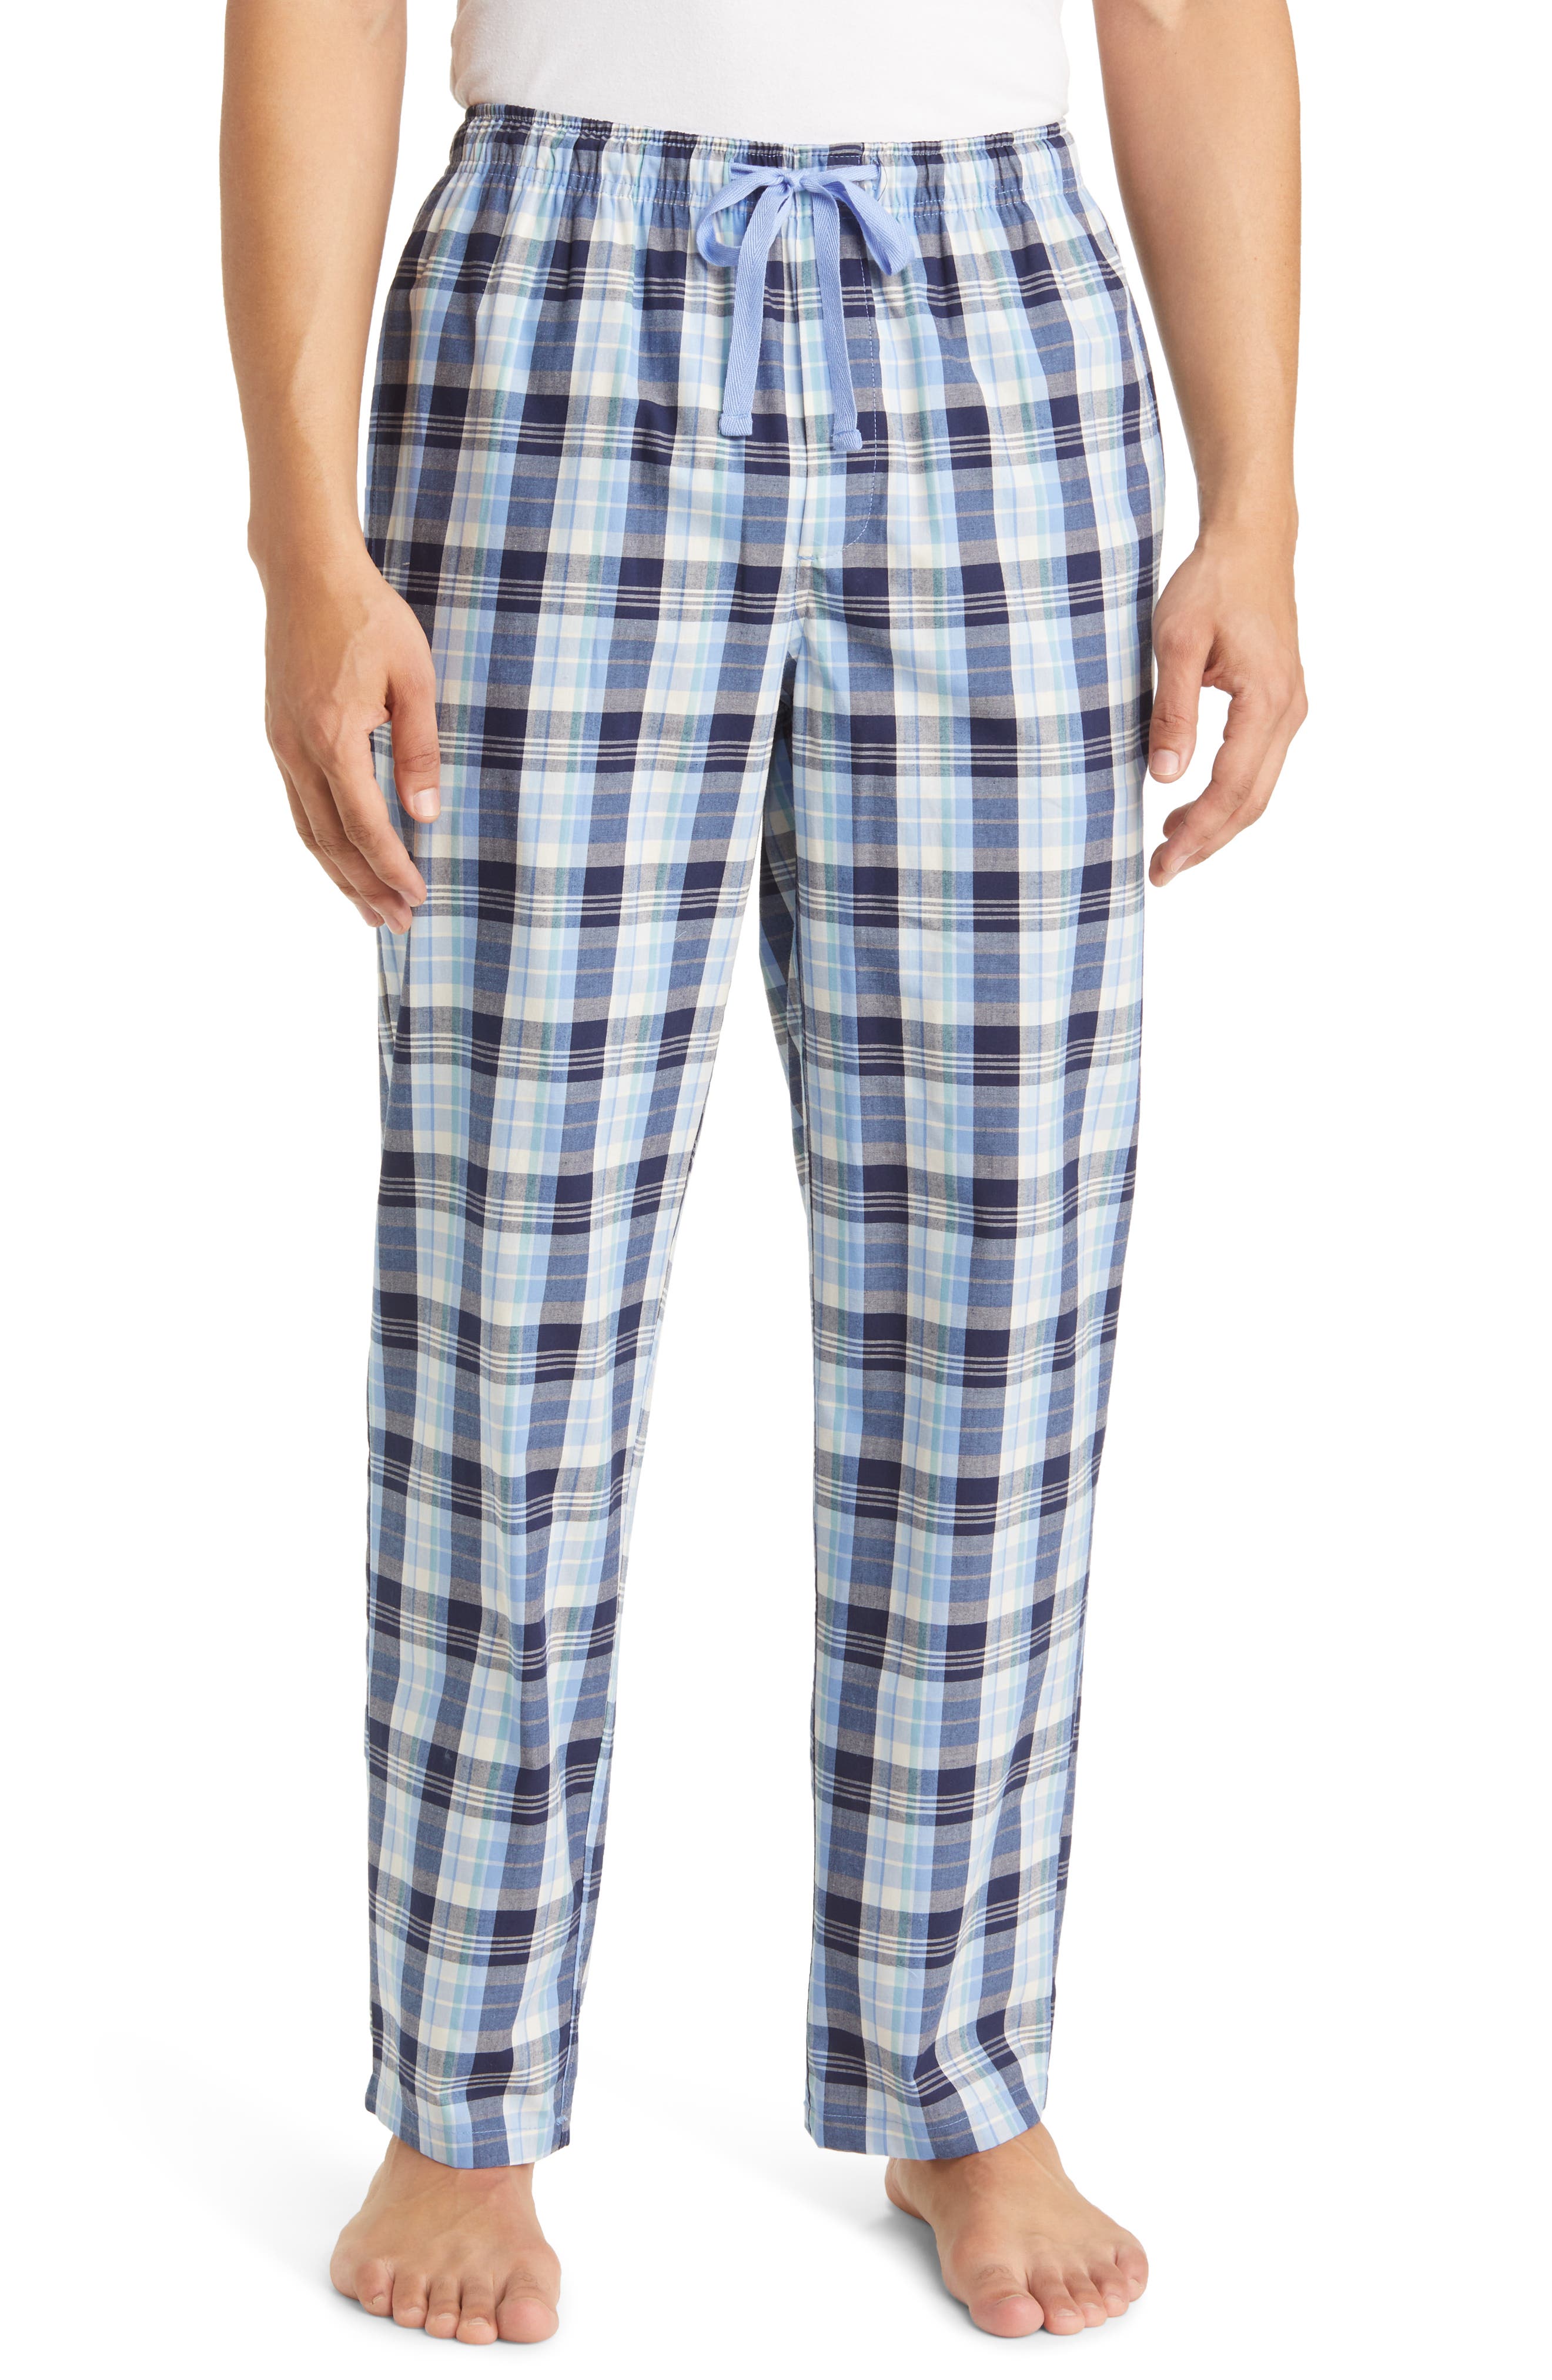 Mens Pajama Set and Separates by LazyOne Pajama Set and Separates for Men 